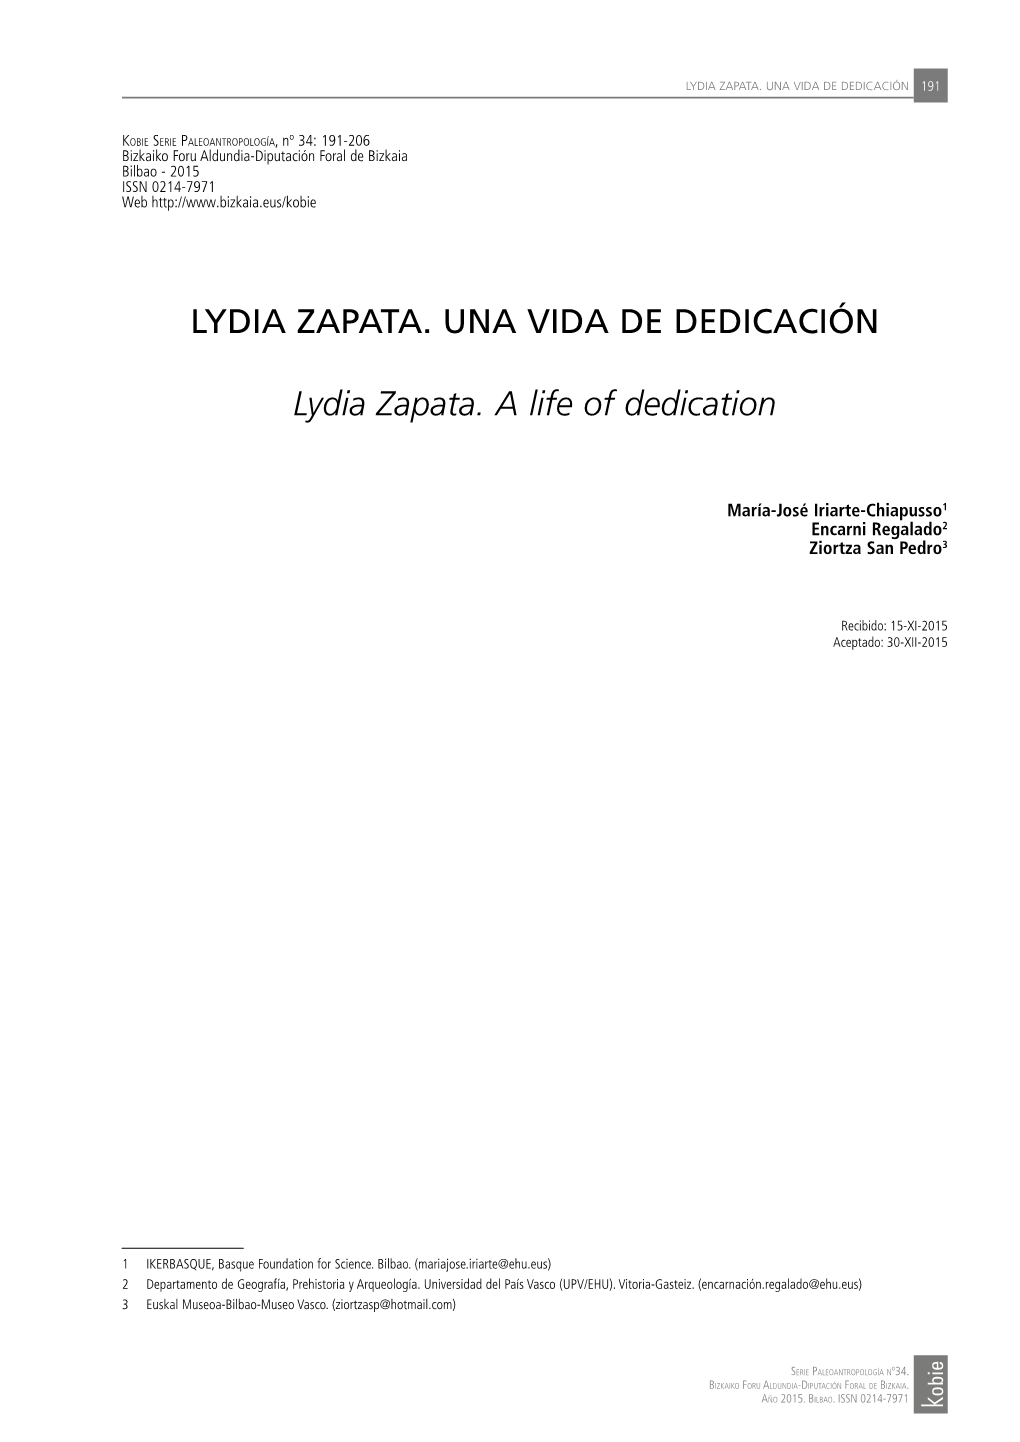 Lydia Zapata. a Life of Dedication